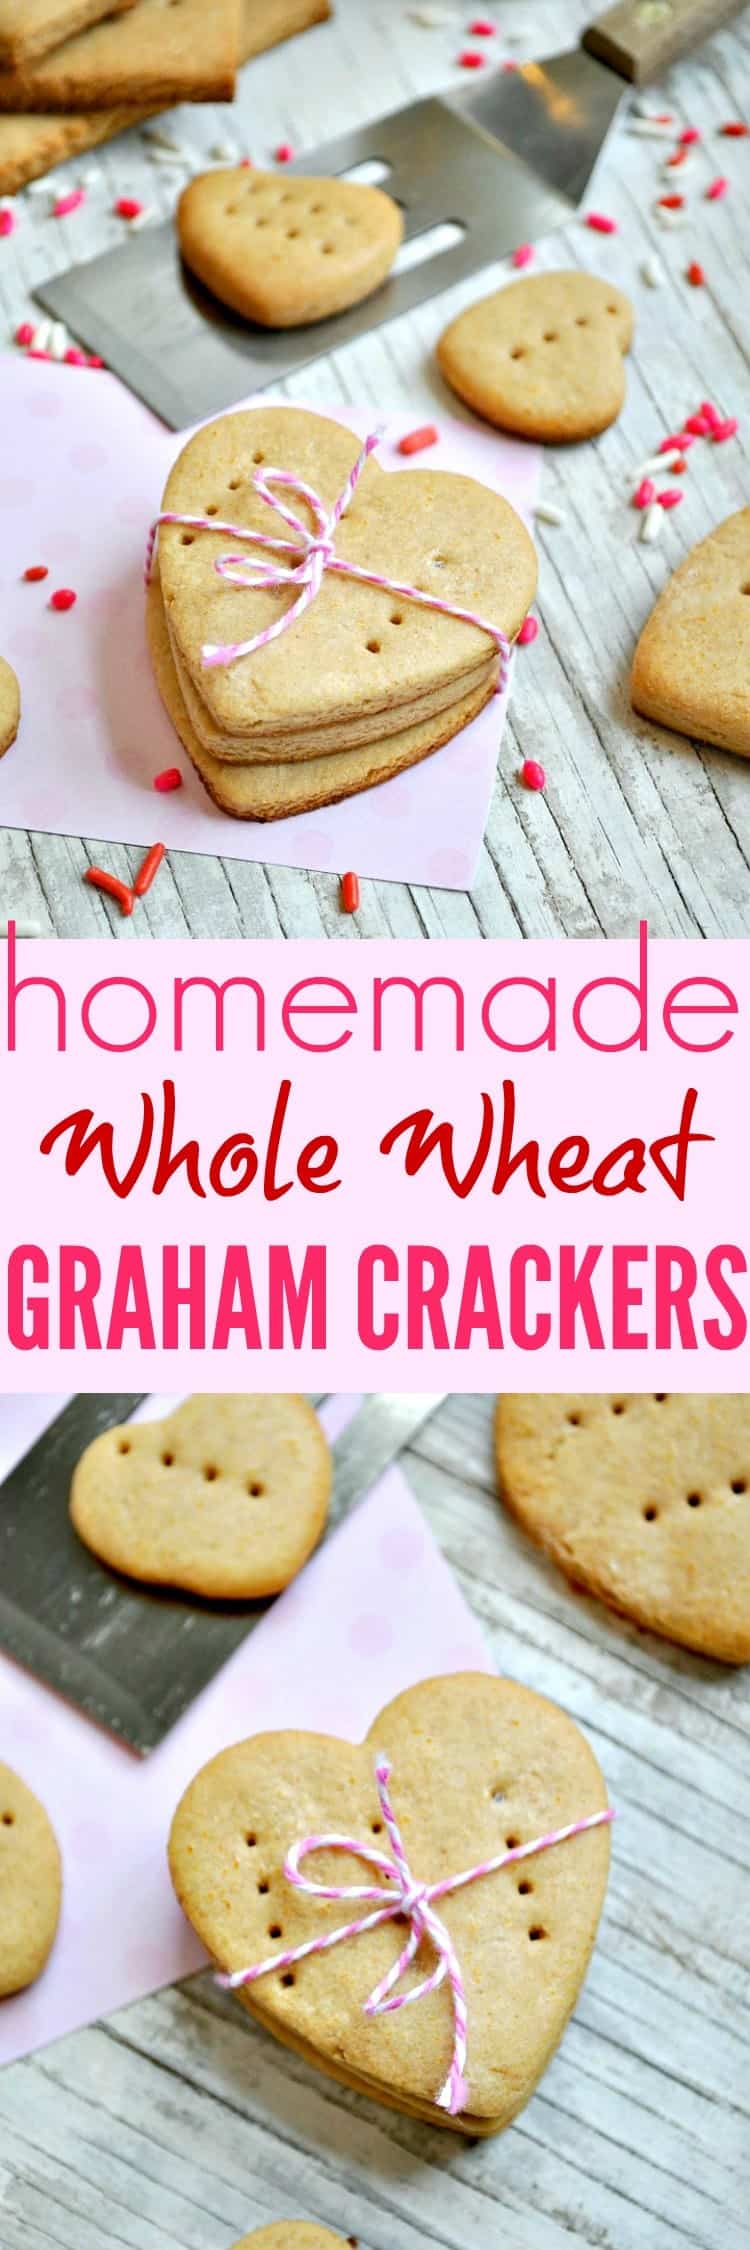 Homemade Whole Wheat Graham Crackers